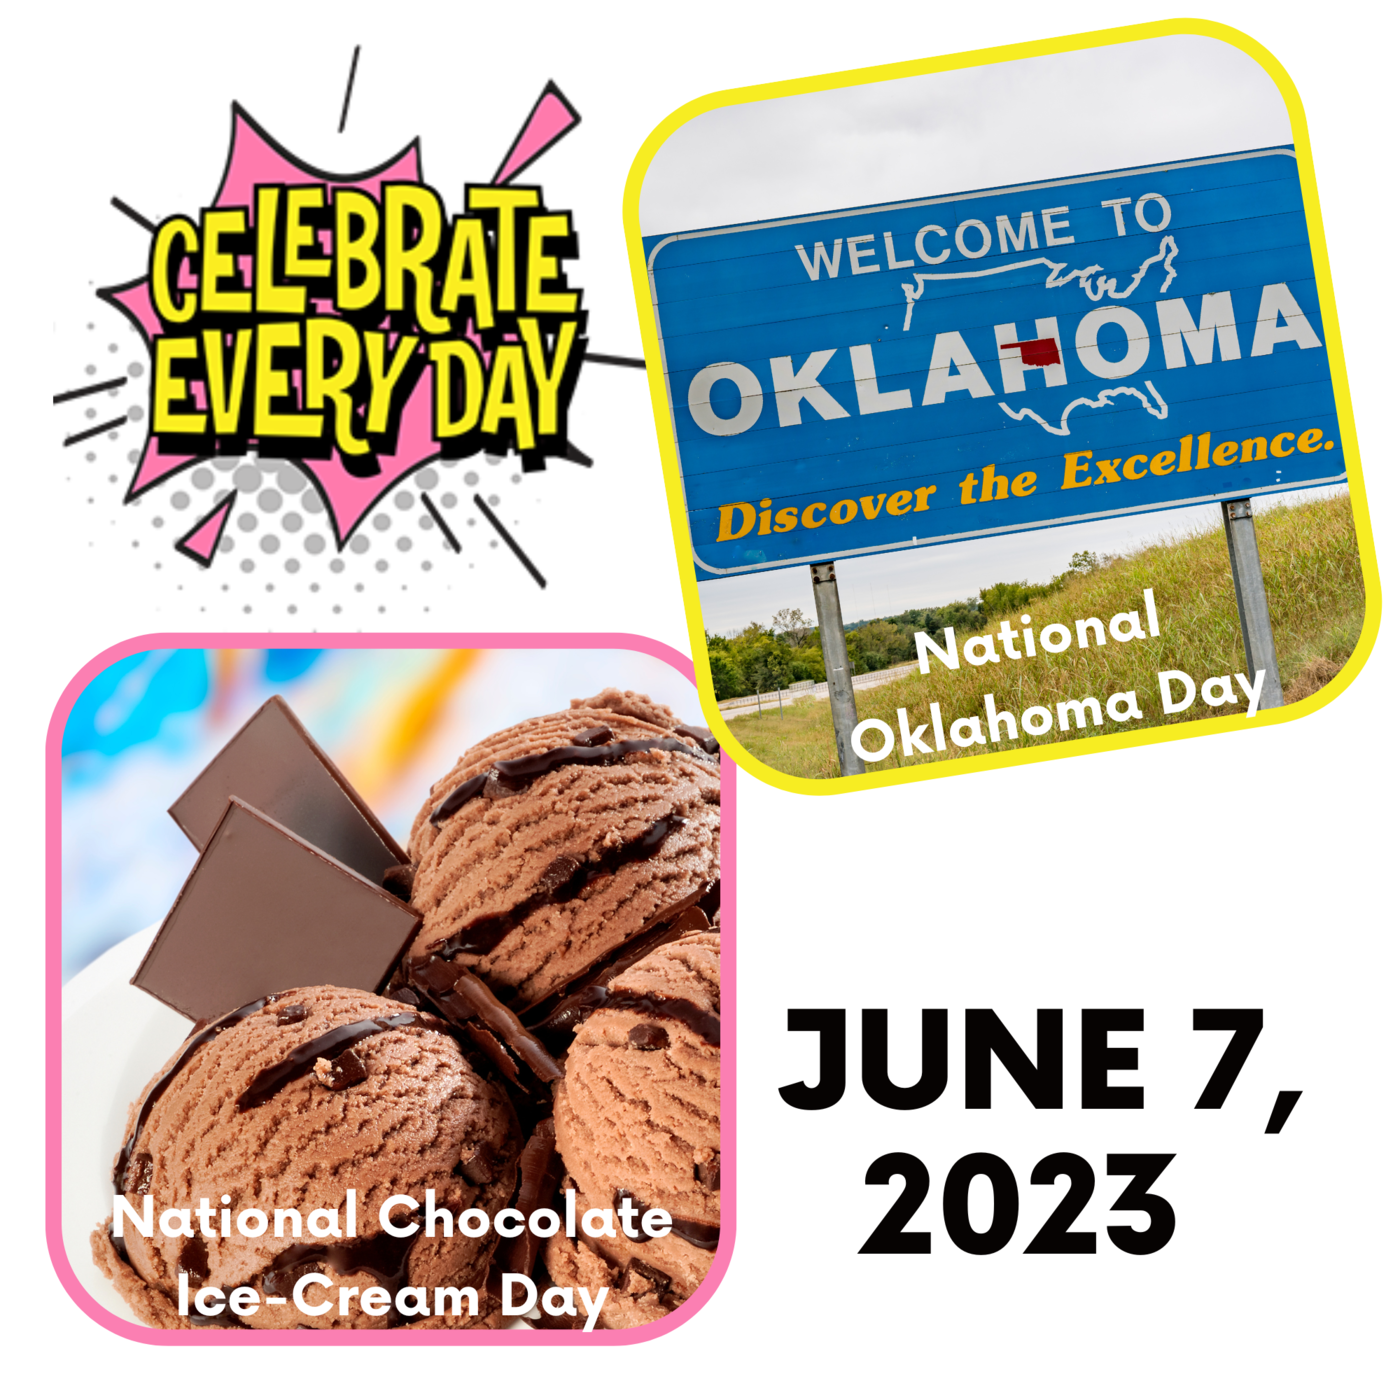 June 7, 2023 - National Oklahoma Day | National Chocolate Ice Cream Day Image